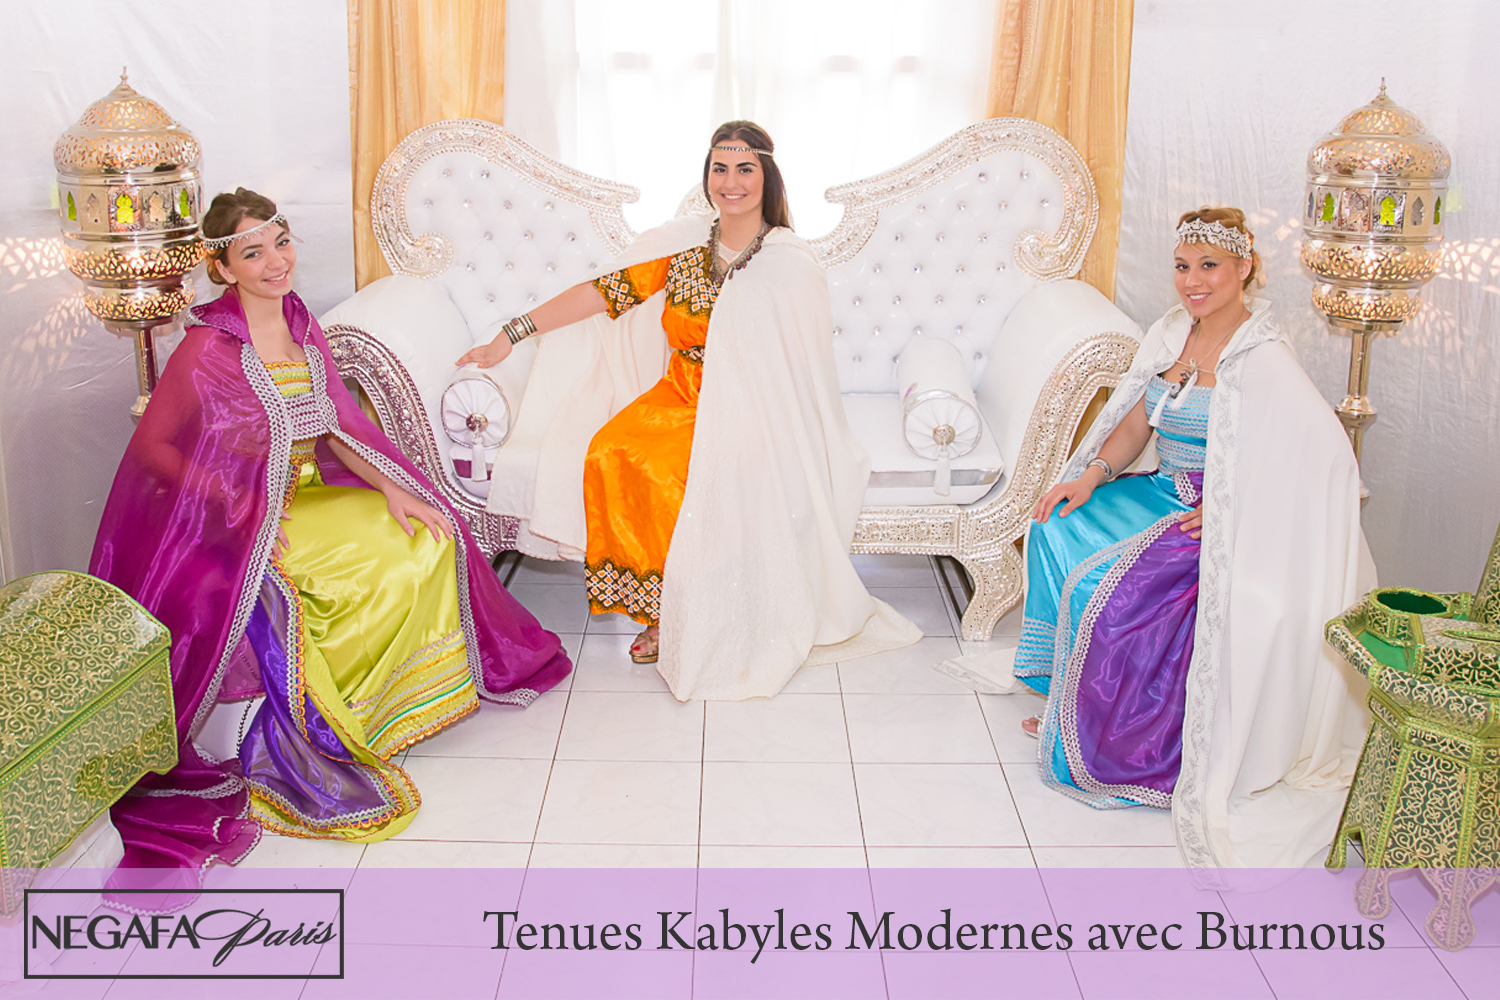 Tenue Kabyle avec Burnous de Negafa